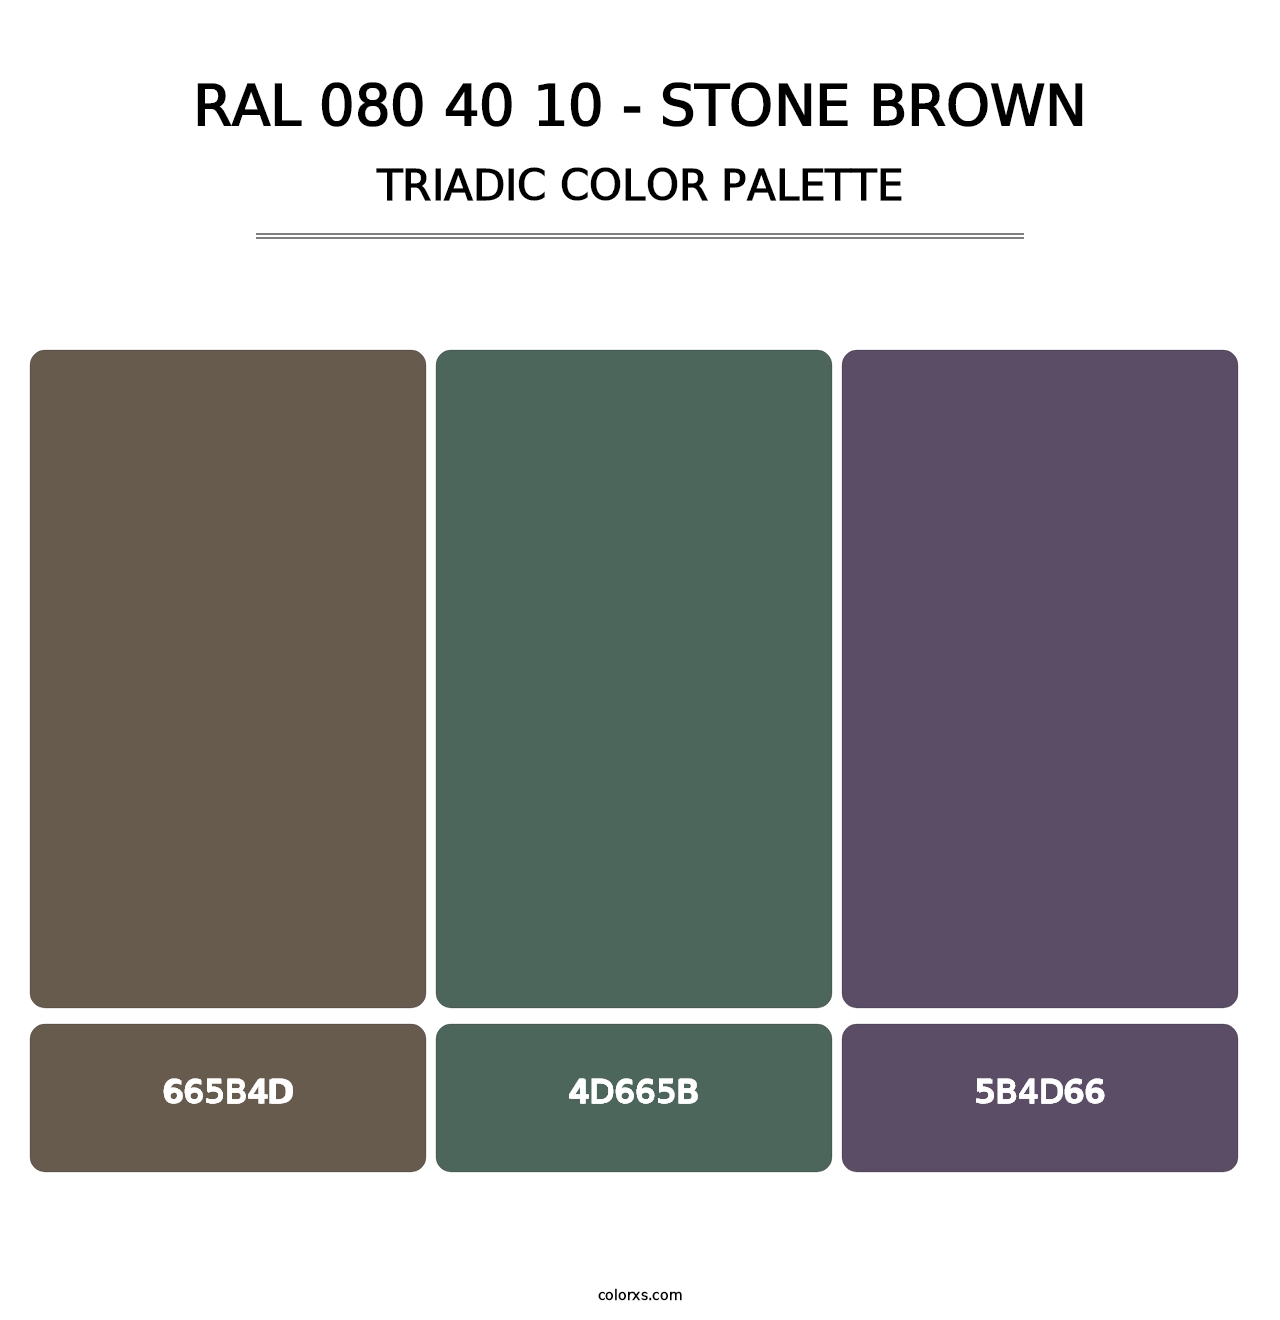 RAL 080 40 10 - Stone Brown - Triadic Color Palette